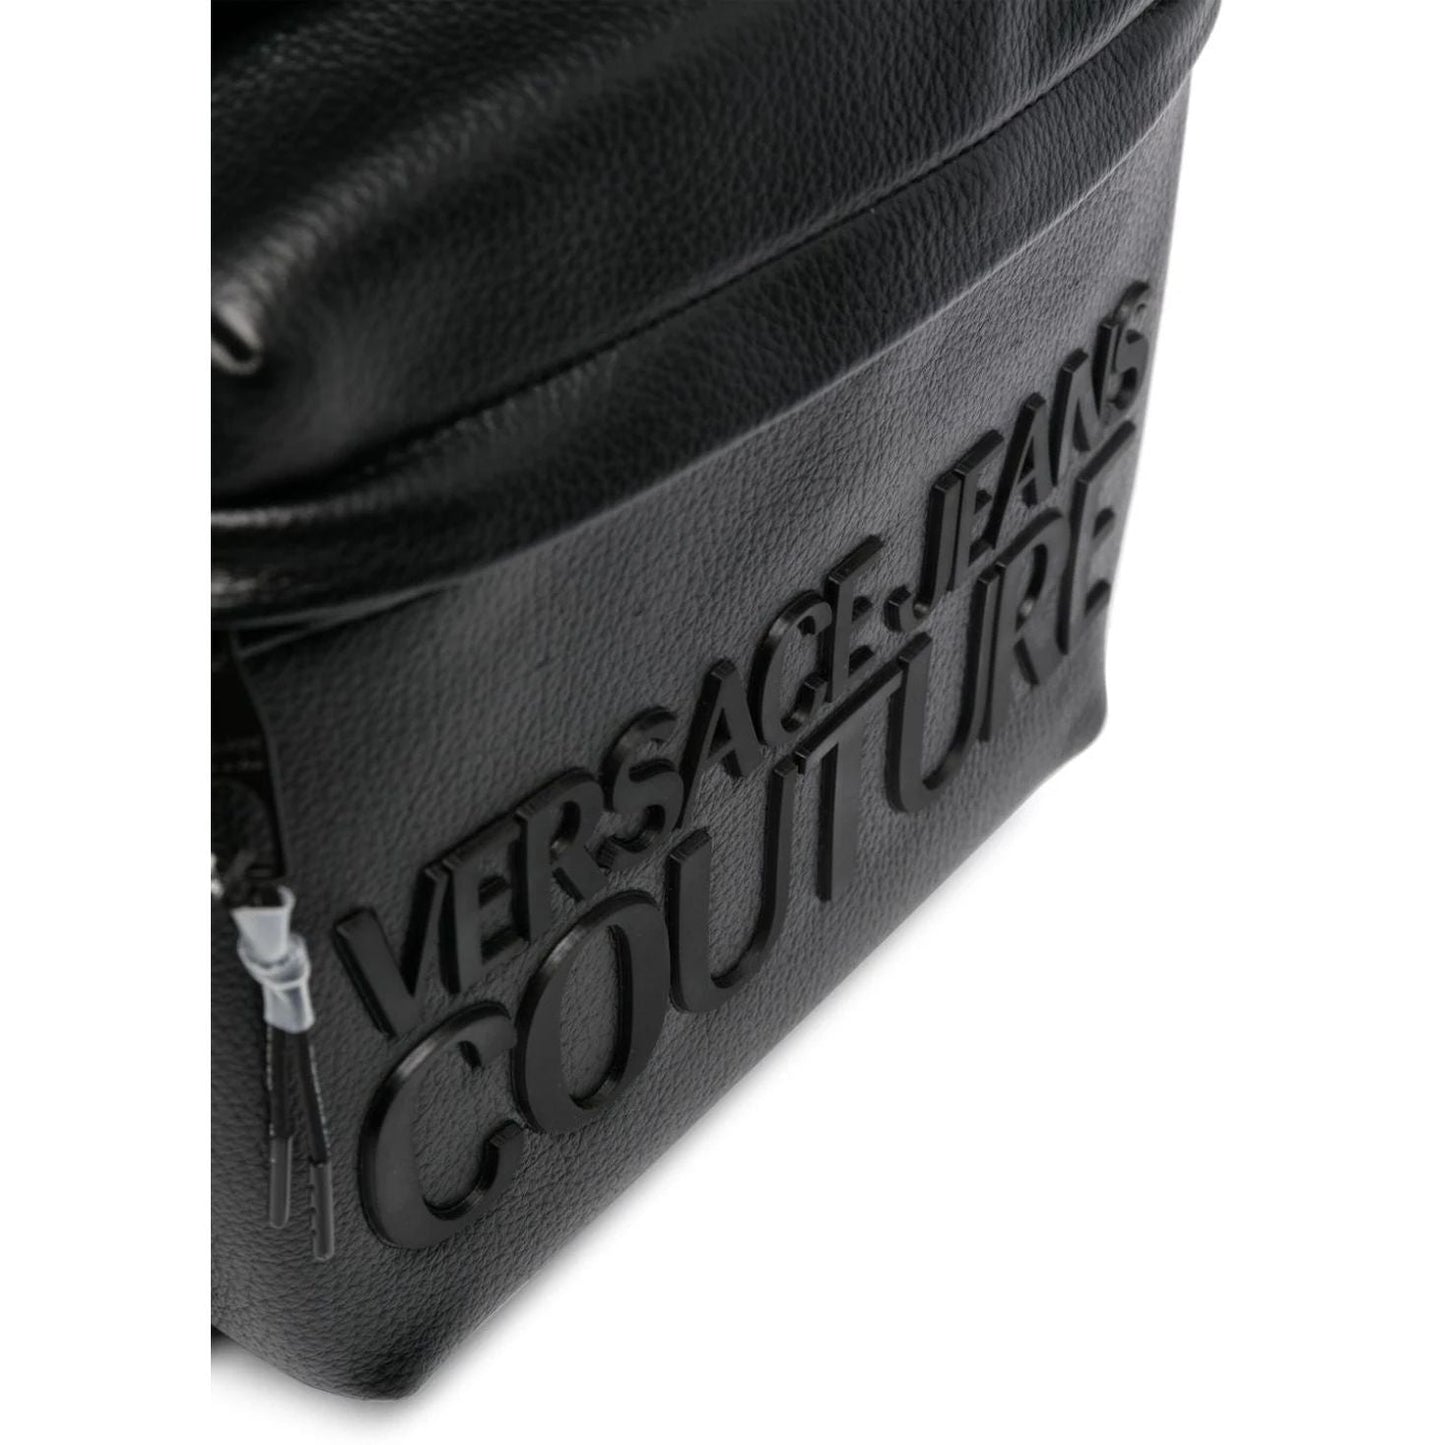 VERSACE JEANS COUTURE vyriška juoda kuprinė Tactile logo  zaino backpack